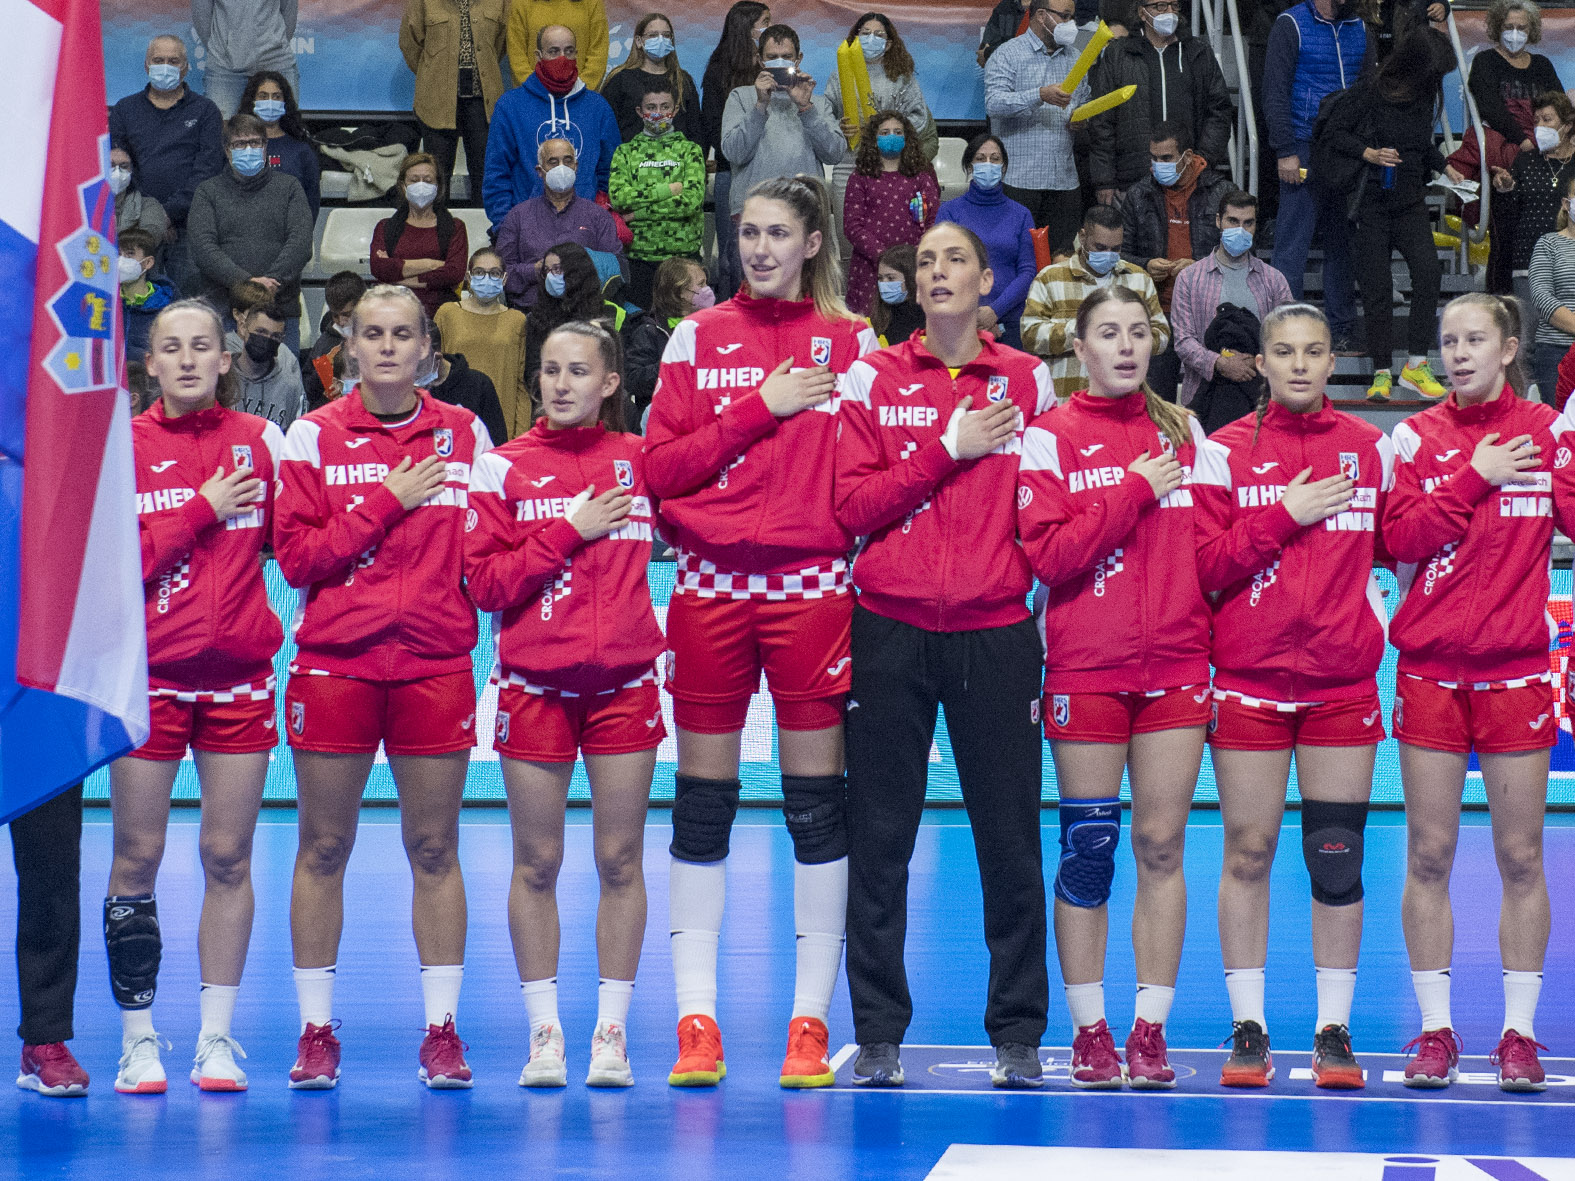 World Women’s Handball Championships: Big win for Croatia over Paraguay